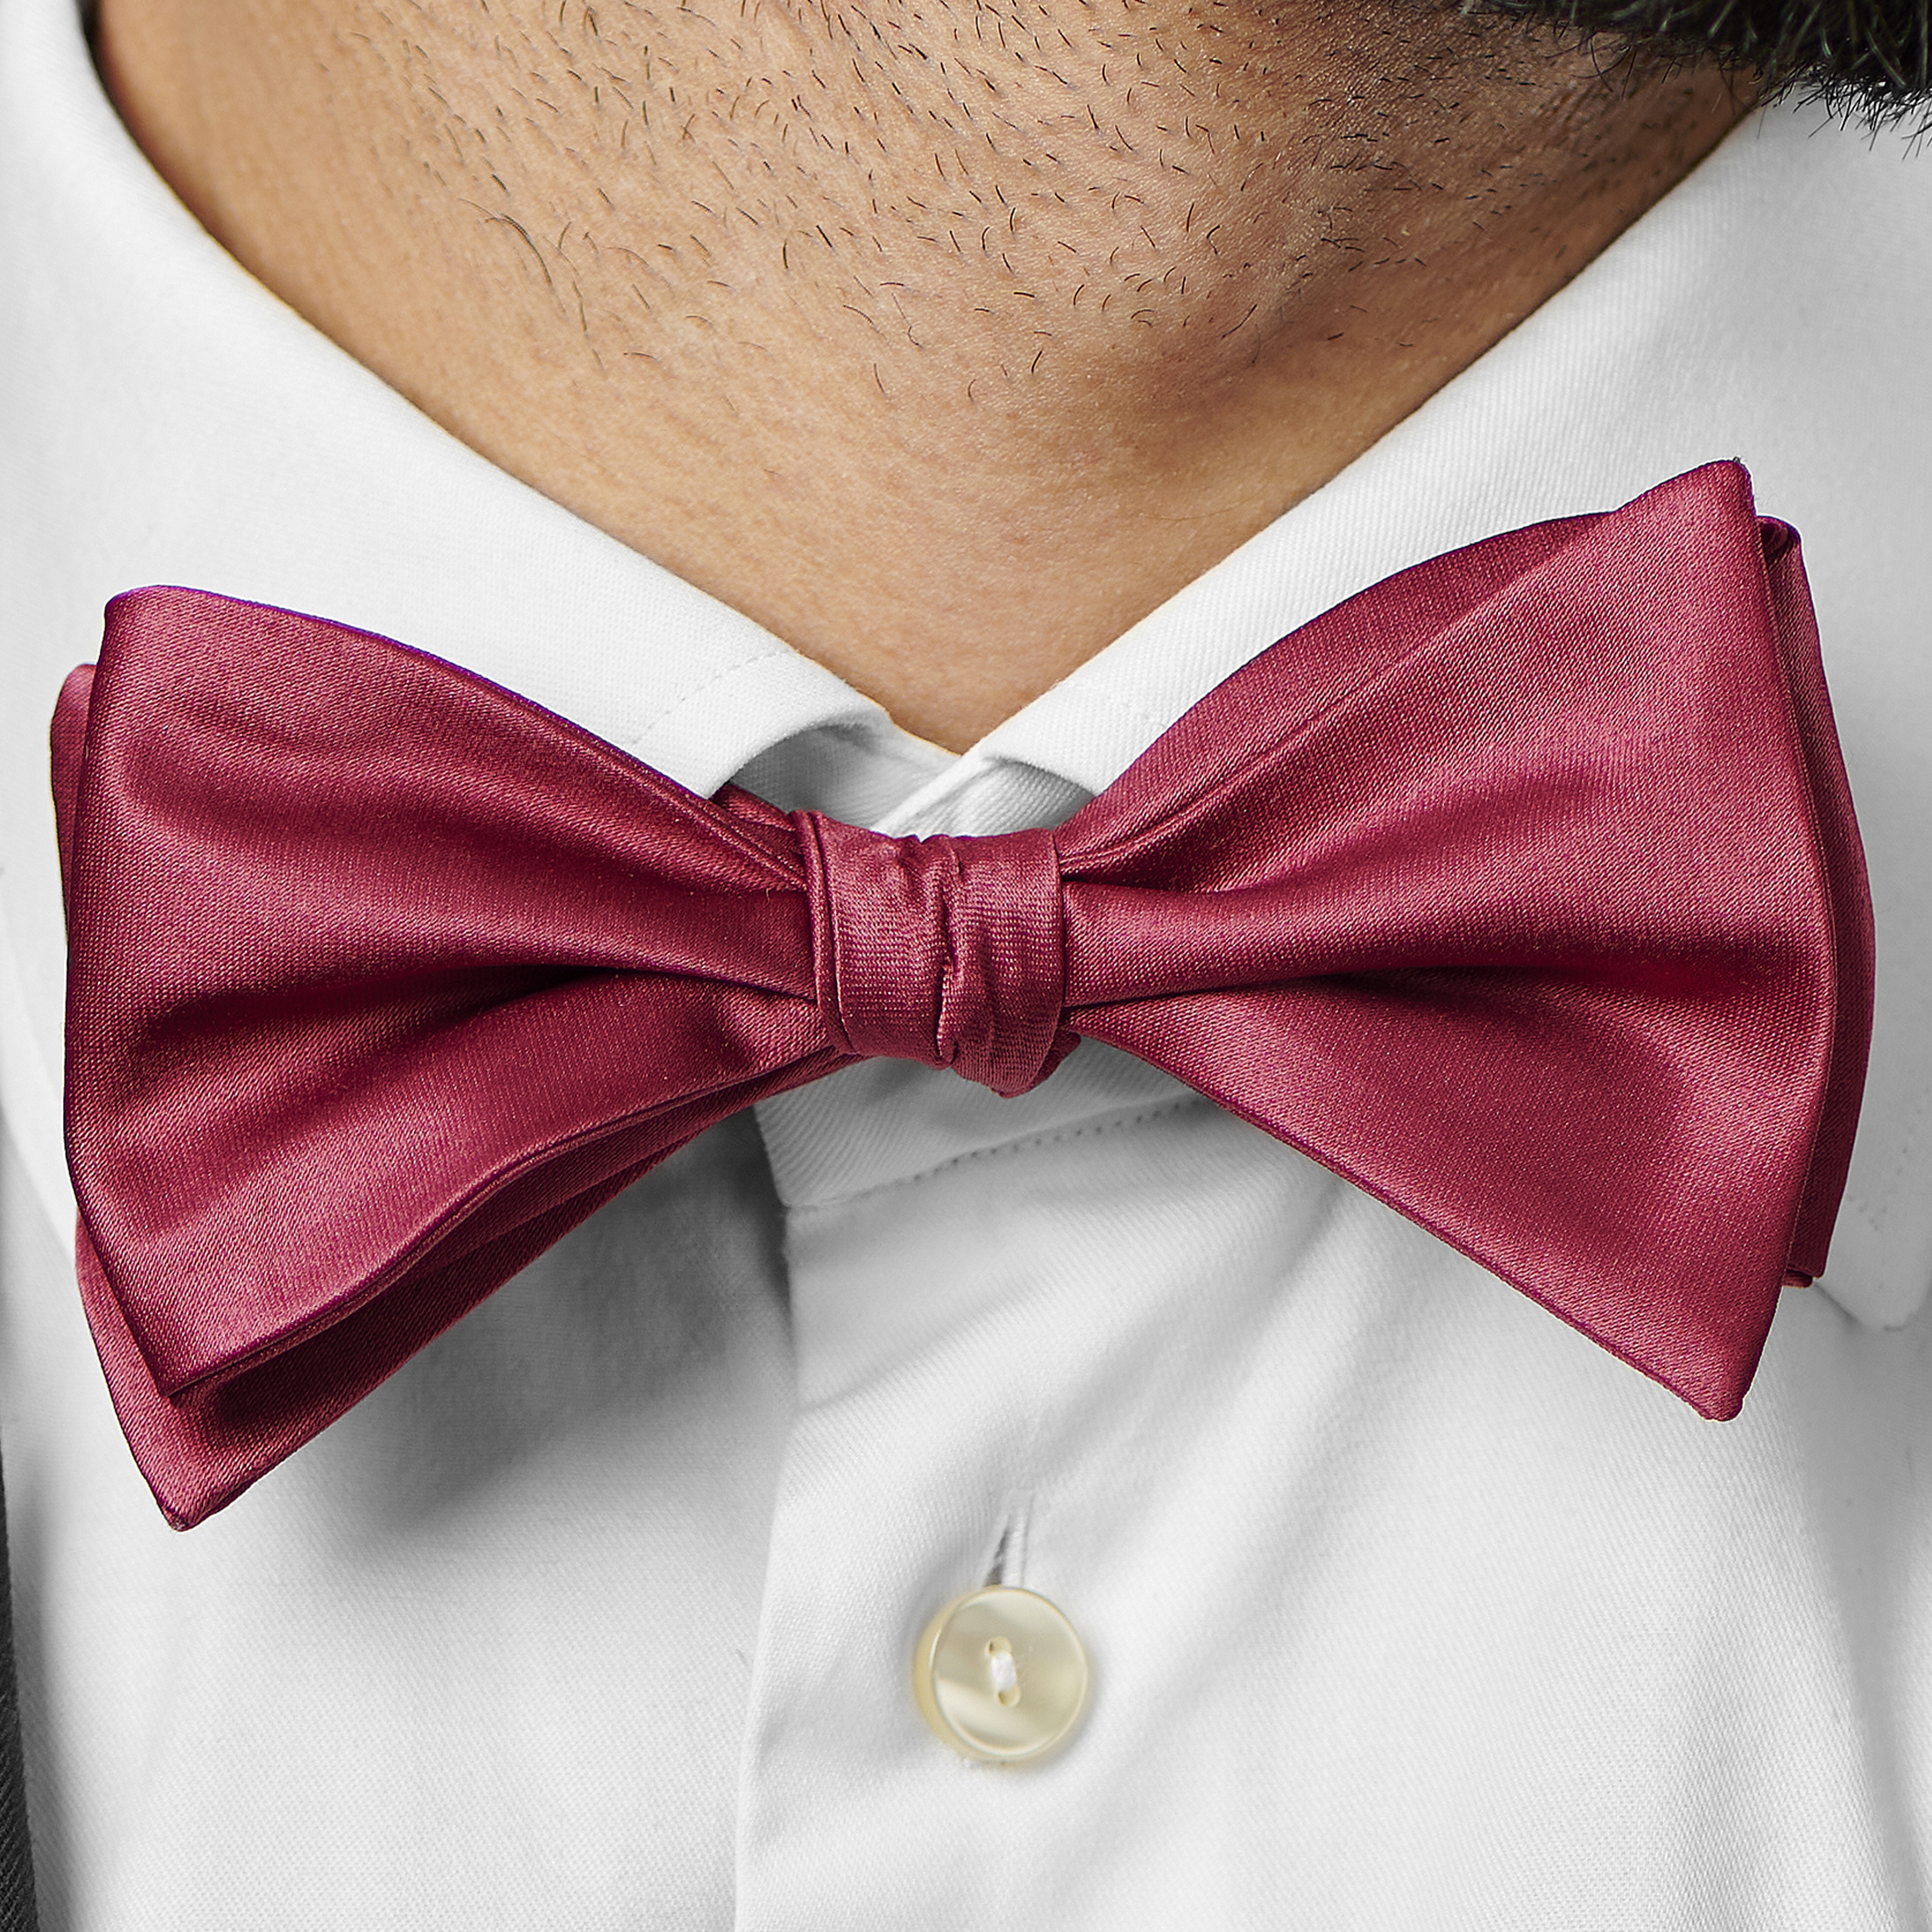 Choose Men's or Boys Bowtie New Cow Print Clip-On Cotton Bow Tie 